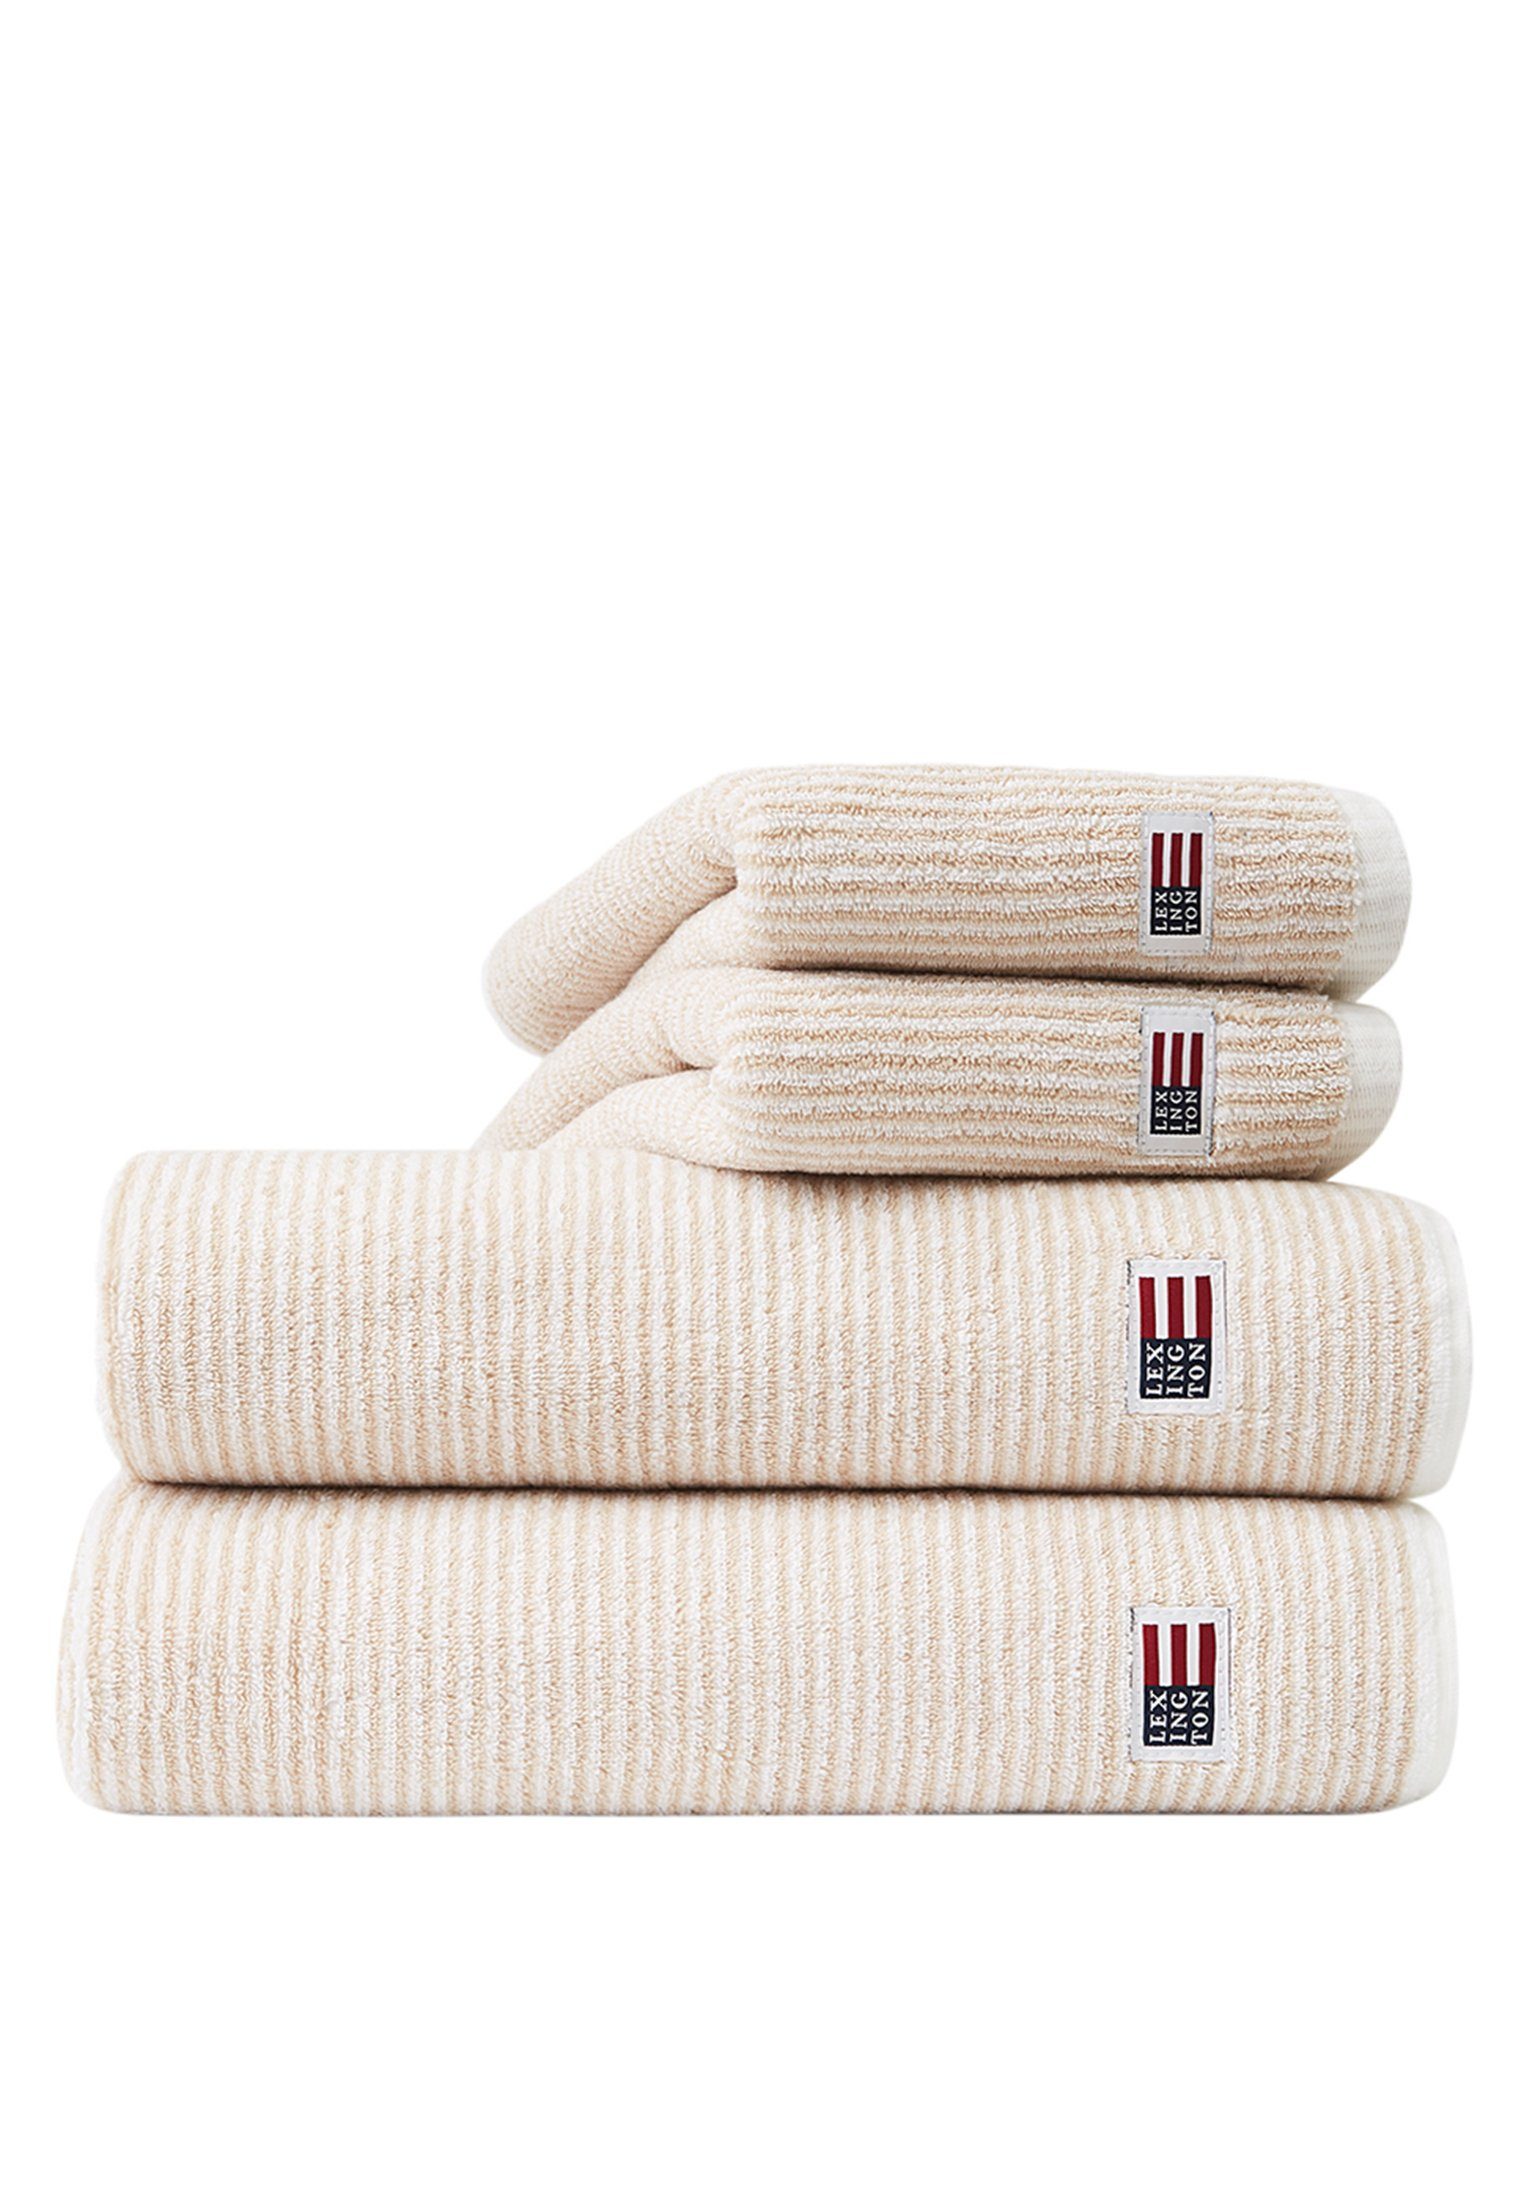 white/tan Towel Handtuch Lexington Original